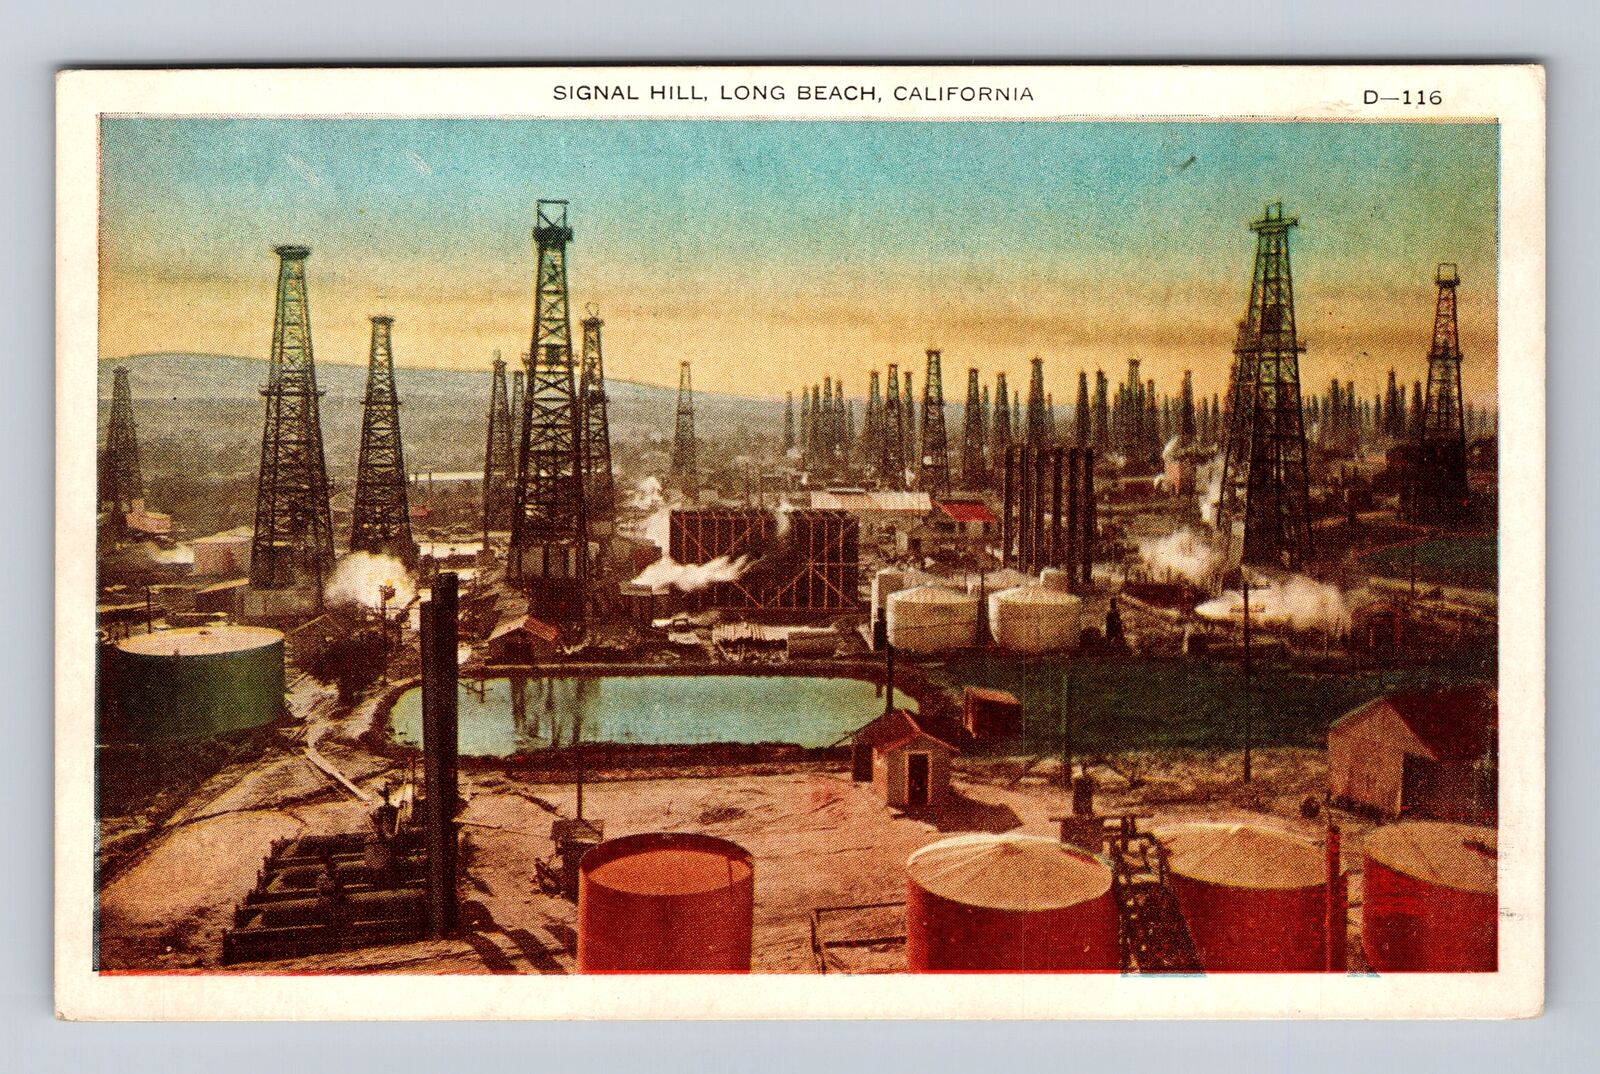 Long Beach CA-California, Signal Hill Oil Fields & Refinery, Vintage Postcard